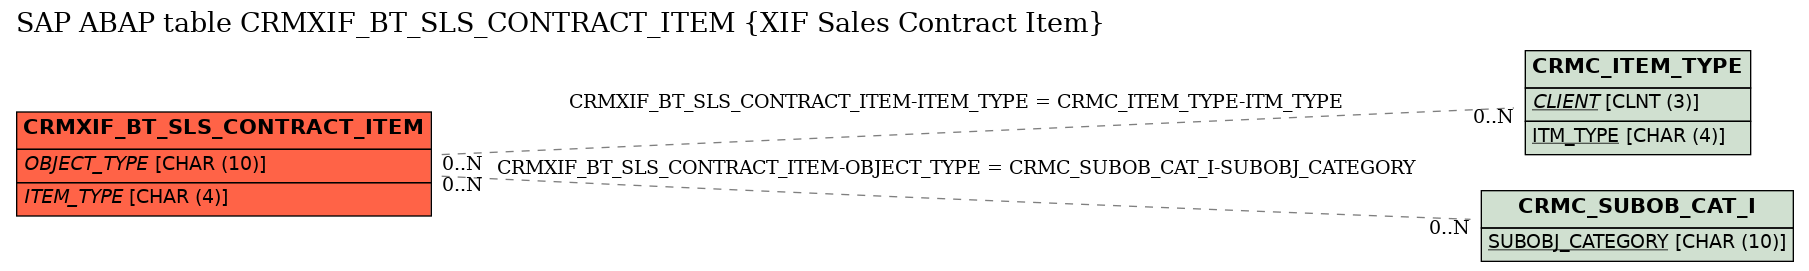 E-R Diagram for table CRMXIF_BT_SLS_CONTRACT_ITEM (XIF Sales Contract Item)